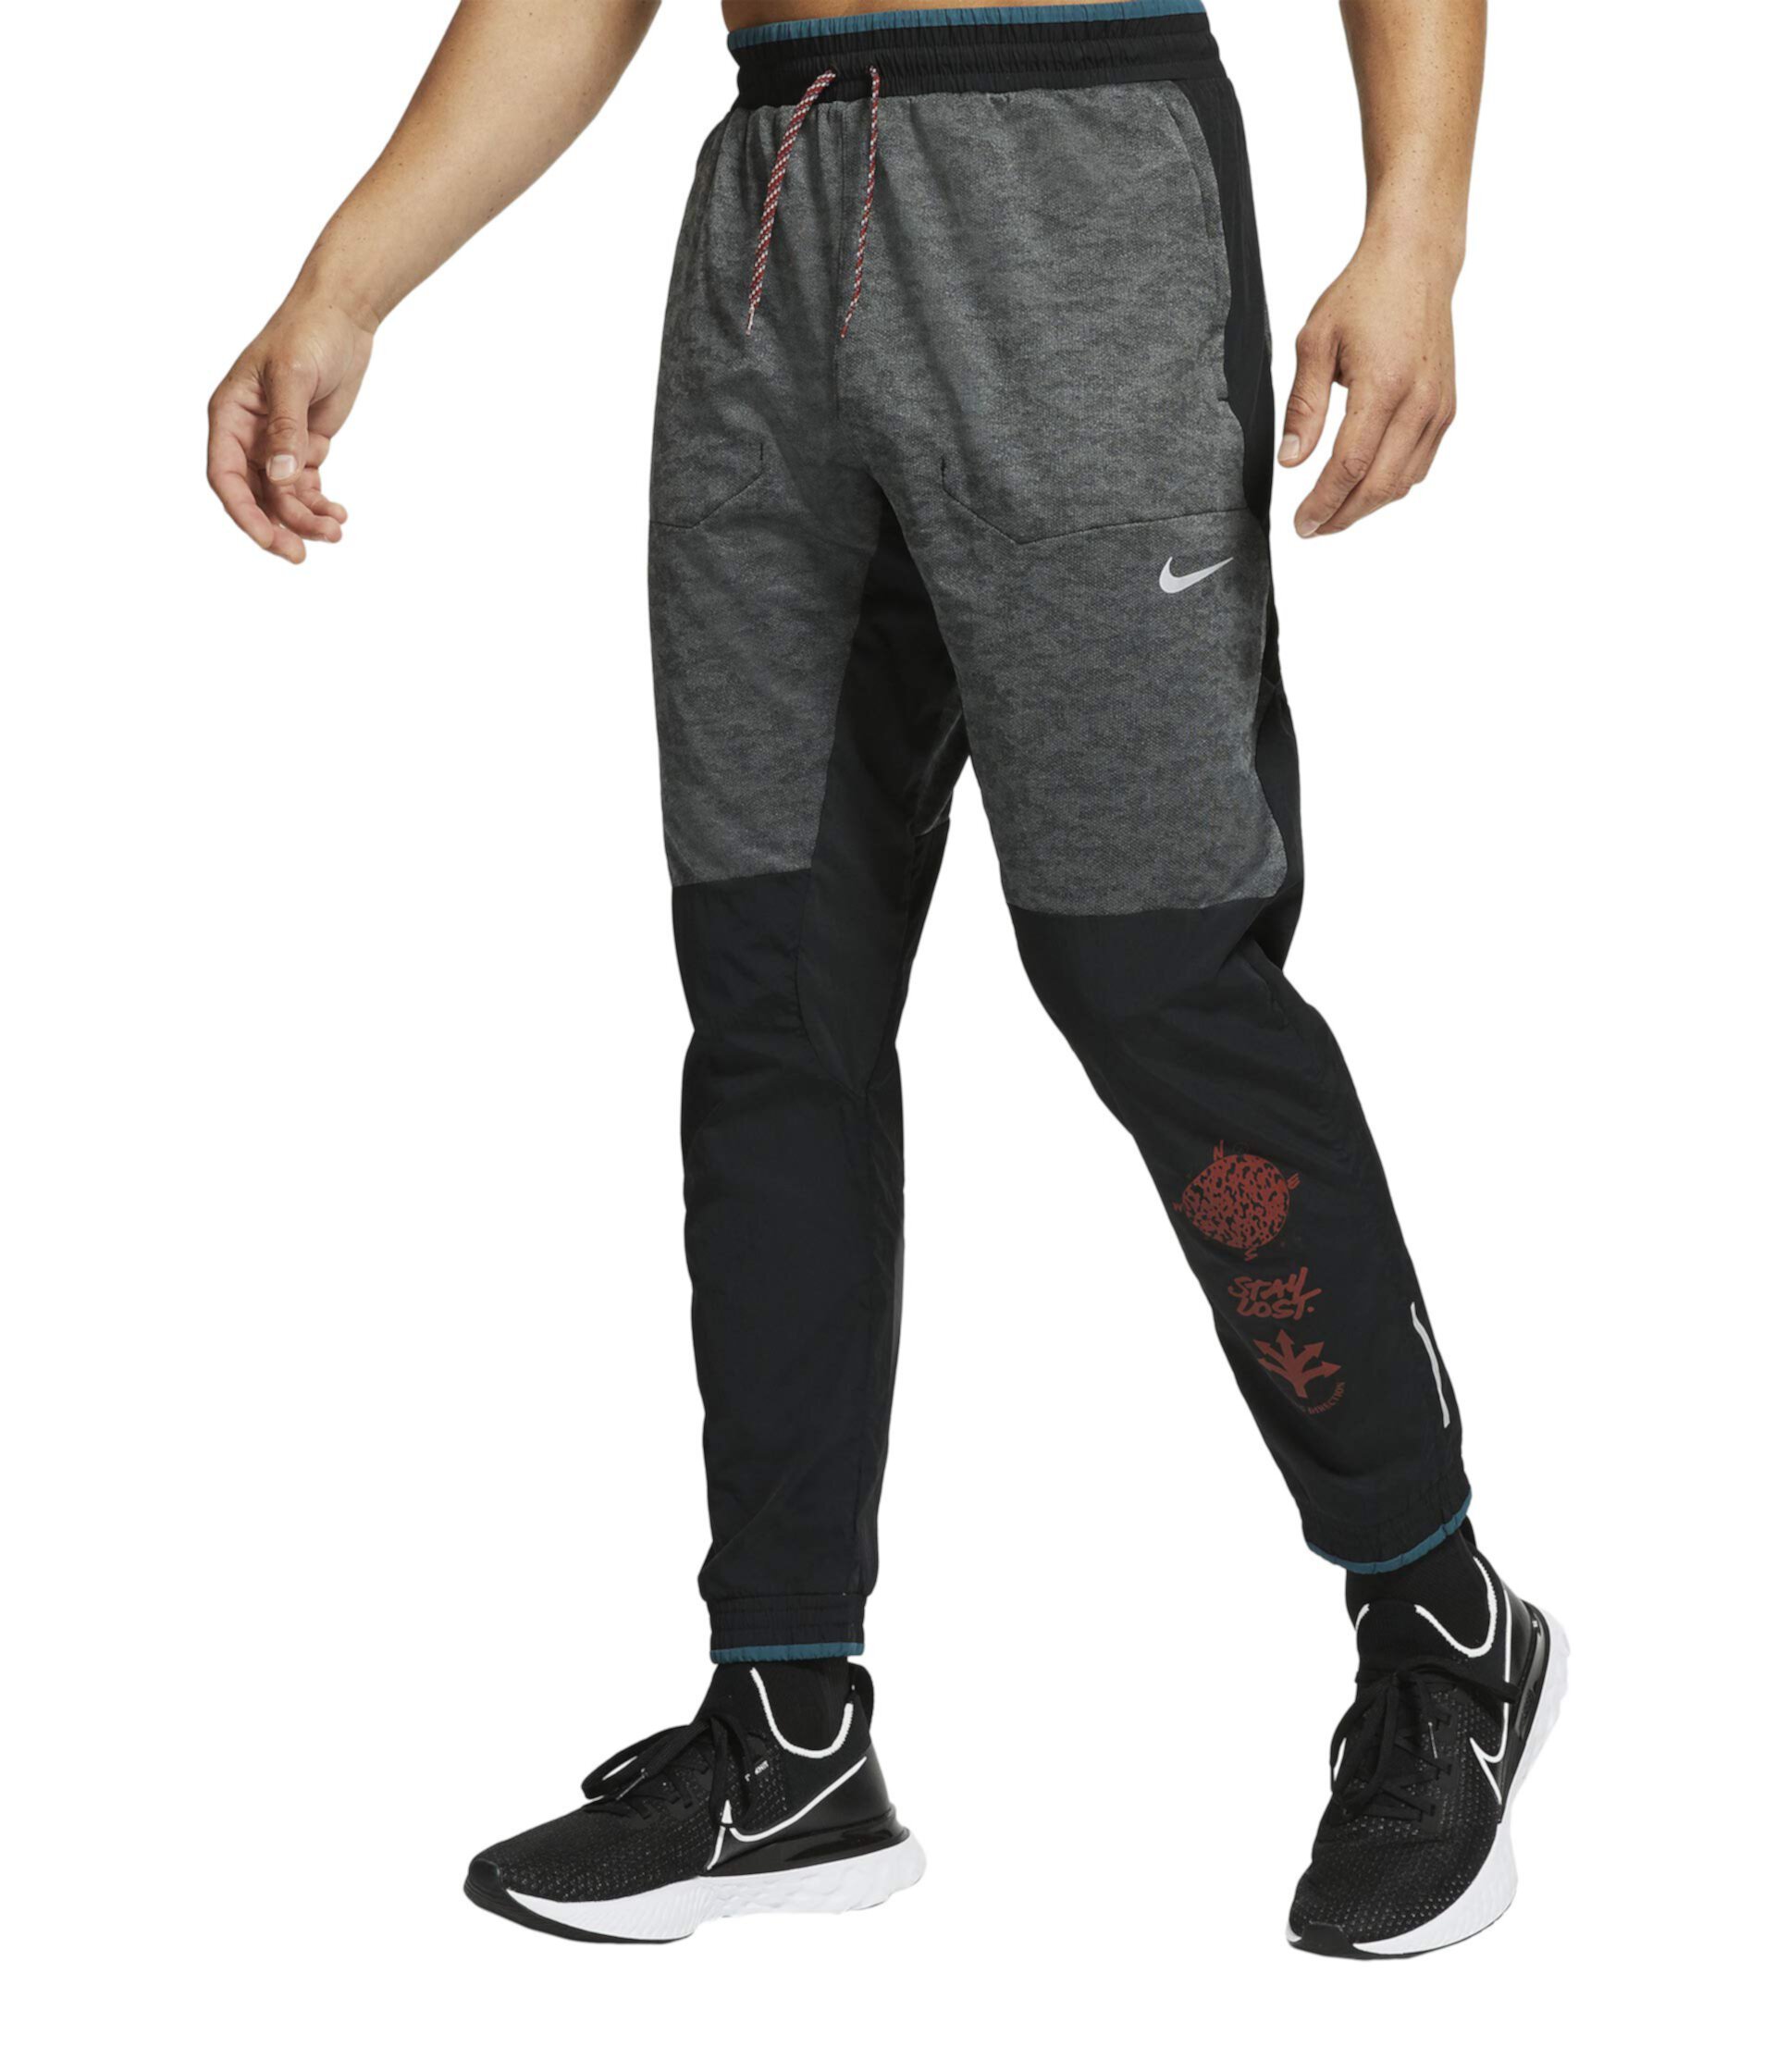 Вязаные штаны Phenom Elite с рисунком Windrunner Nike